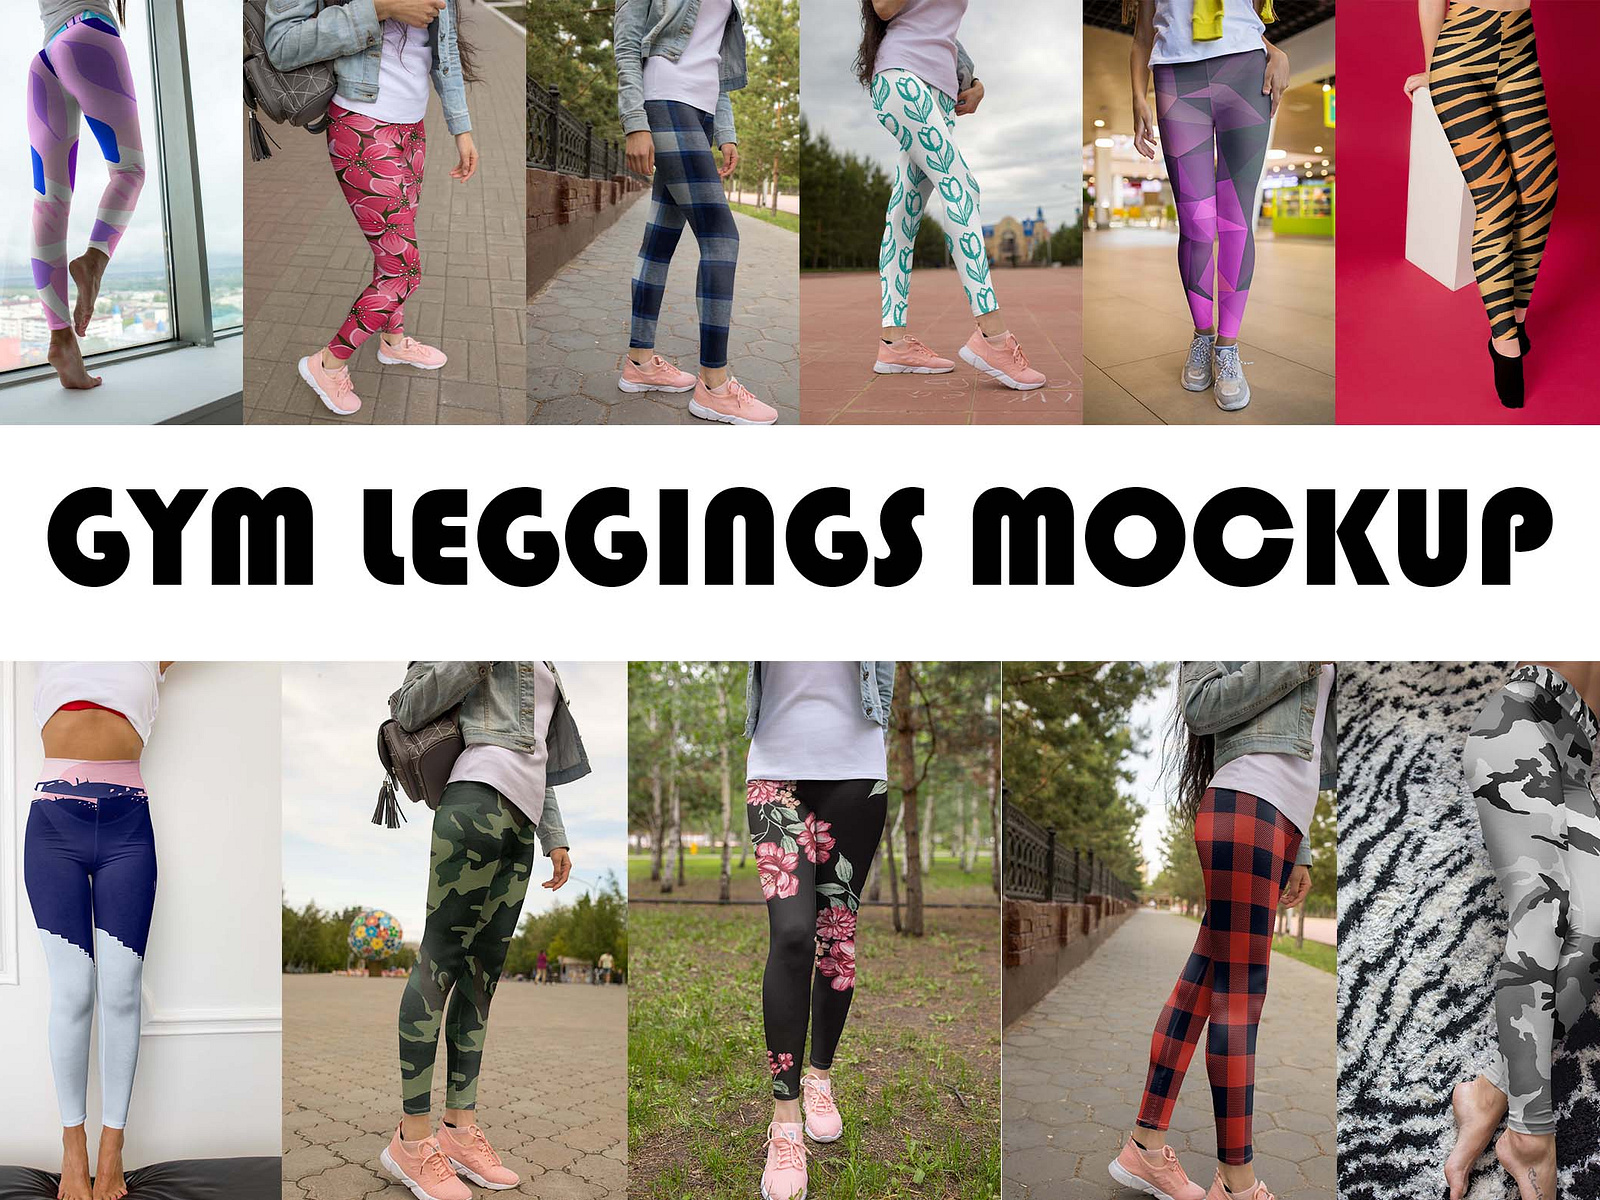 GYM Leggings Mockup by Arun Kumar on Dribbble